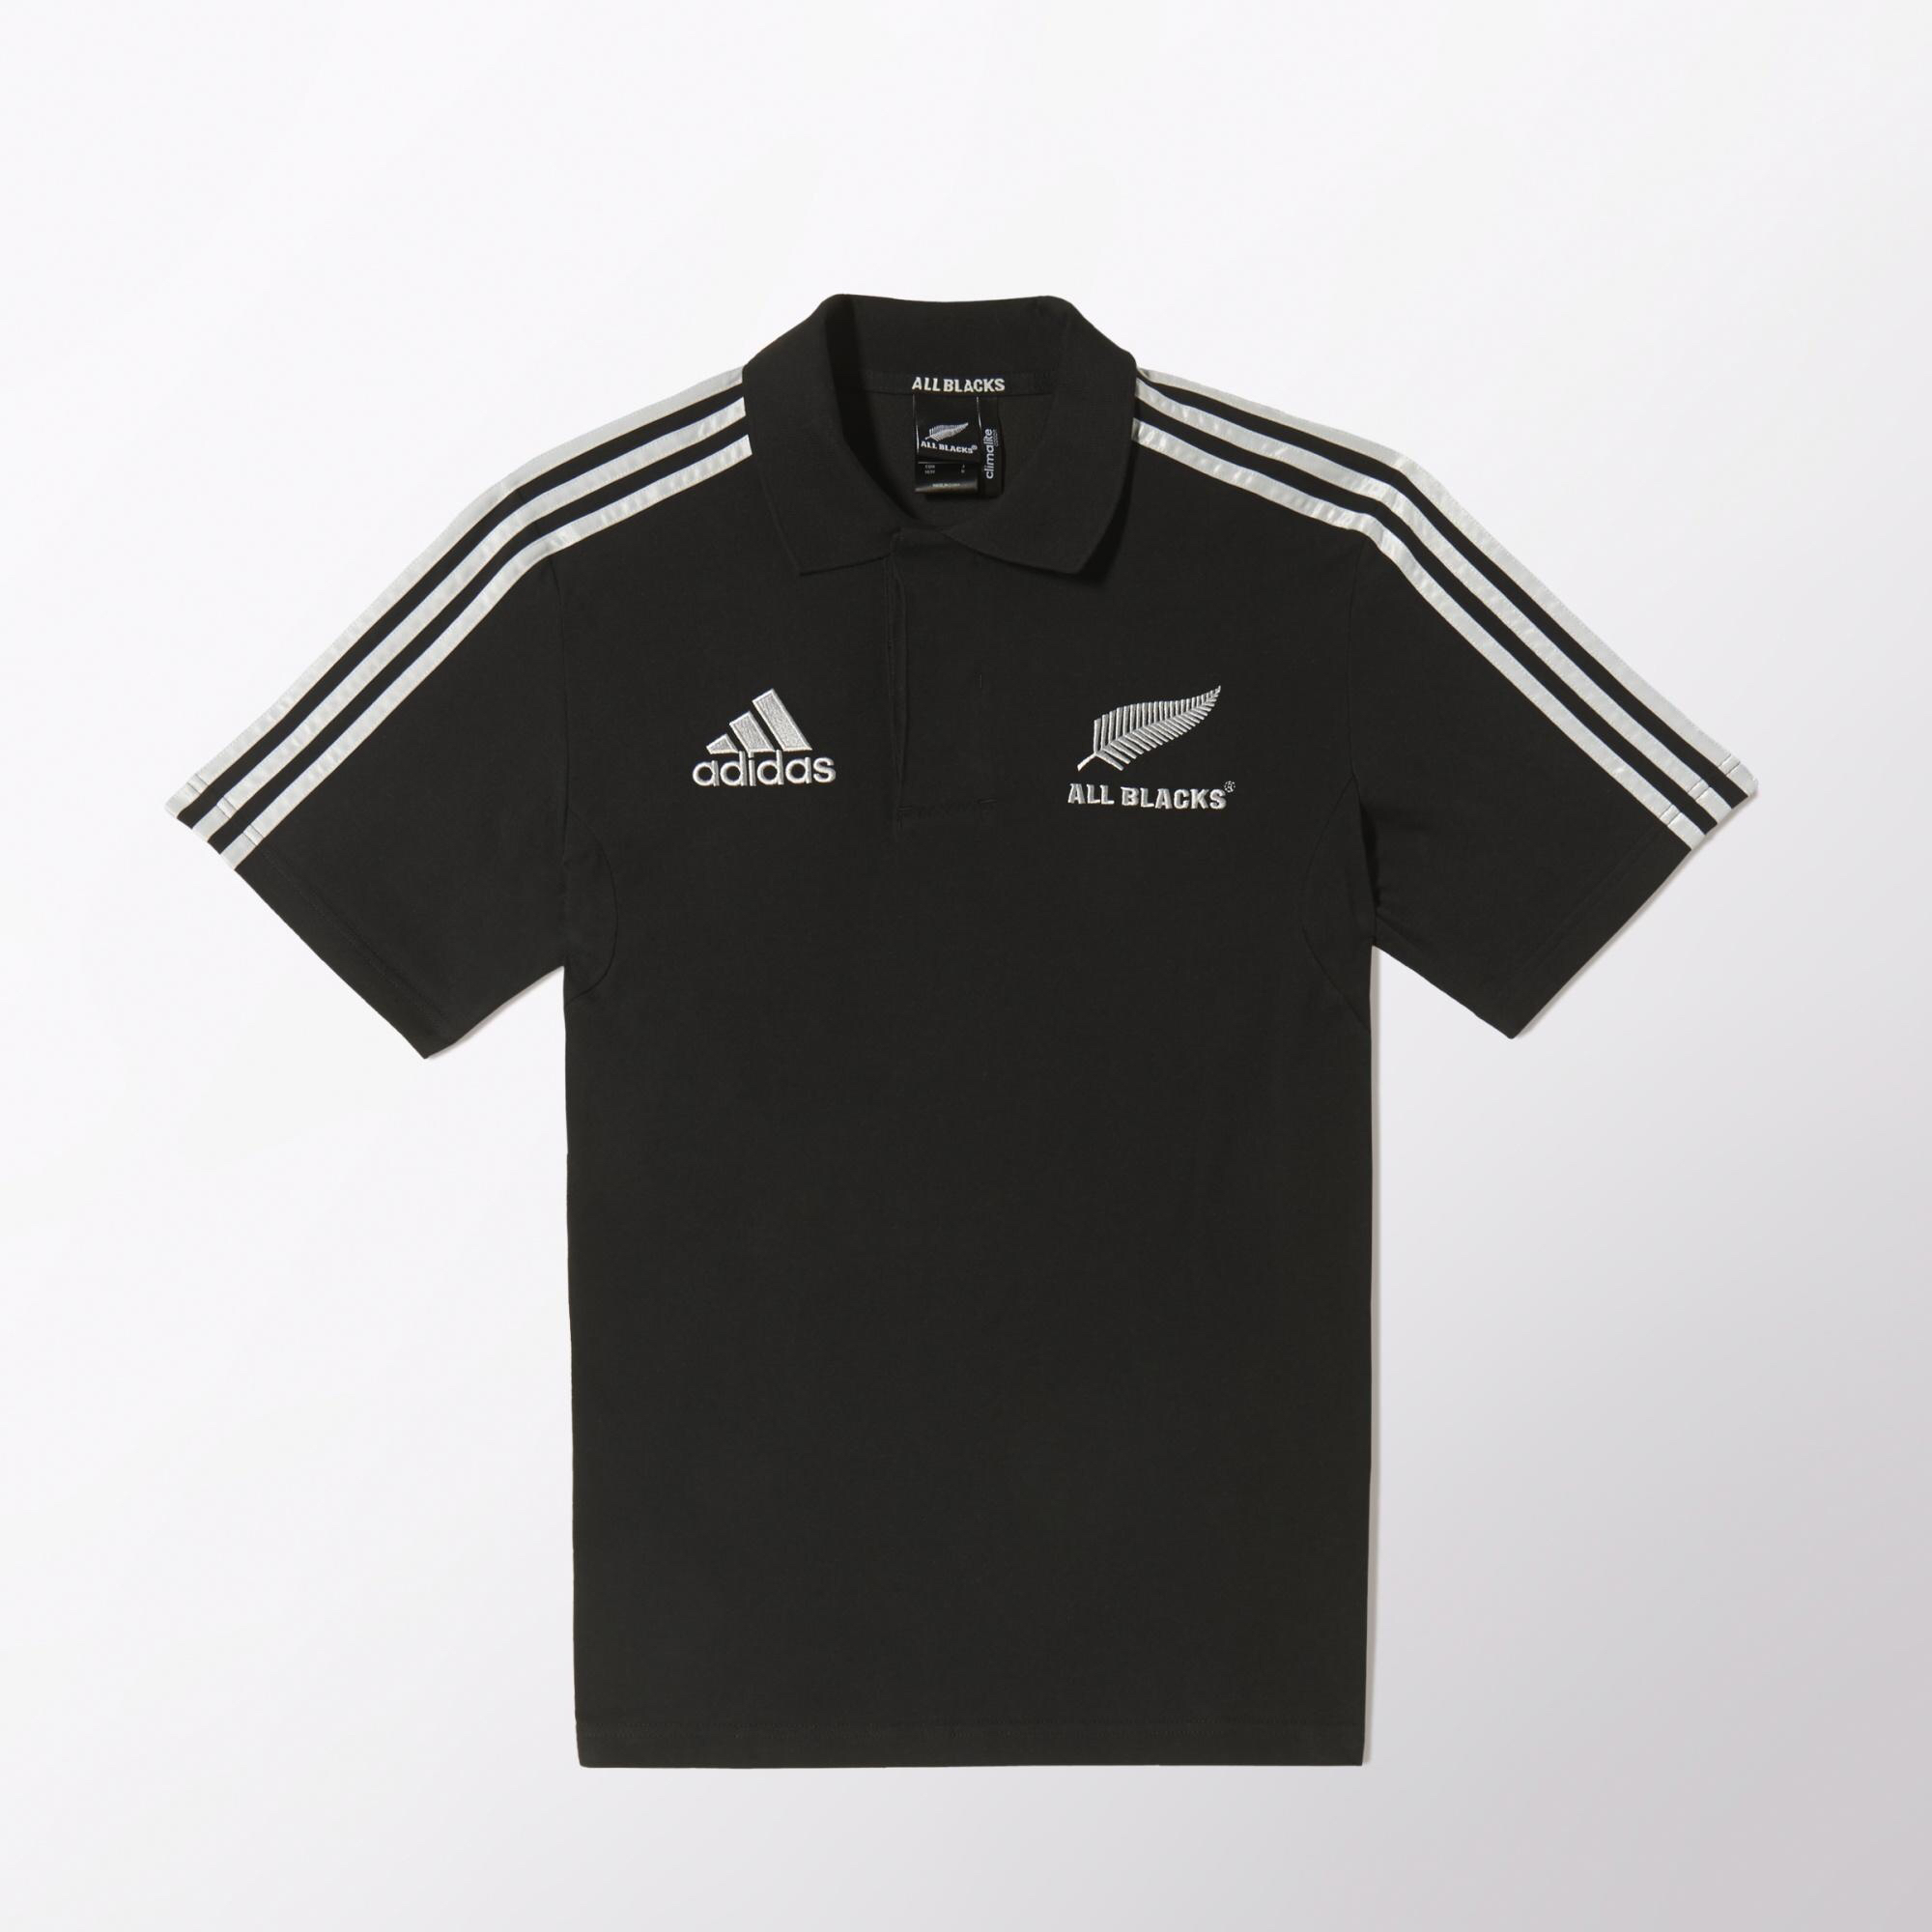 Adidas All Black Polo - The Football 